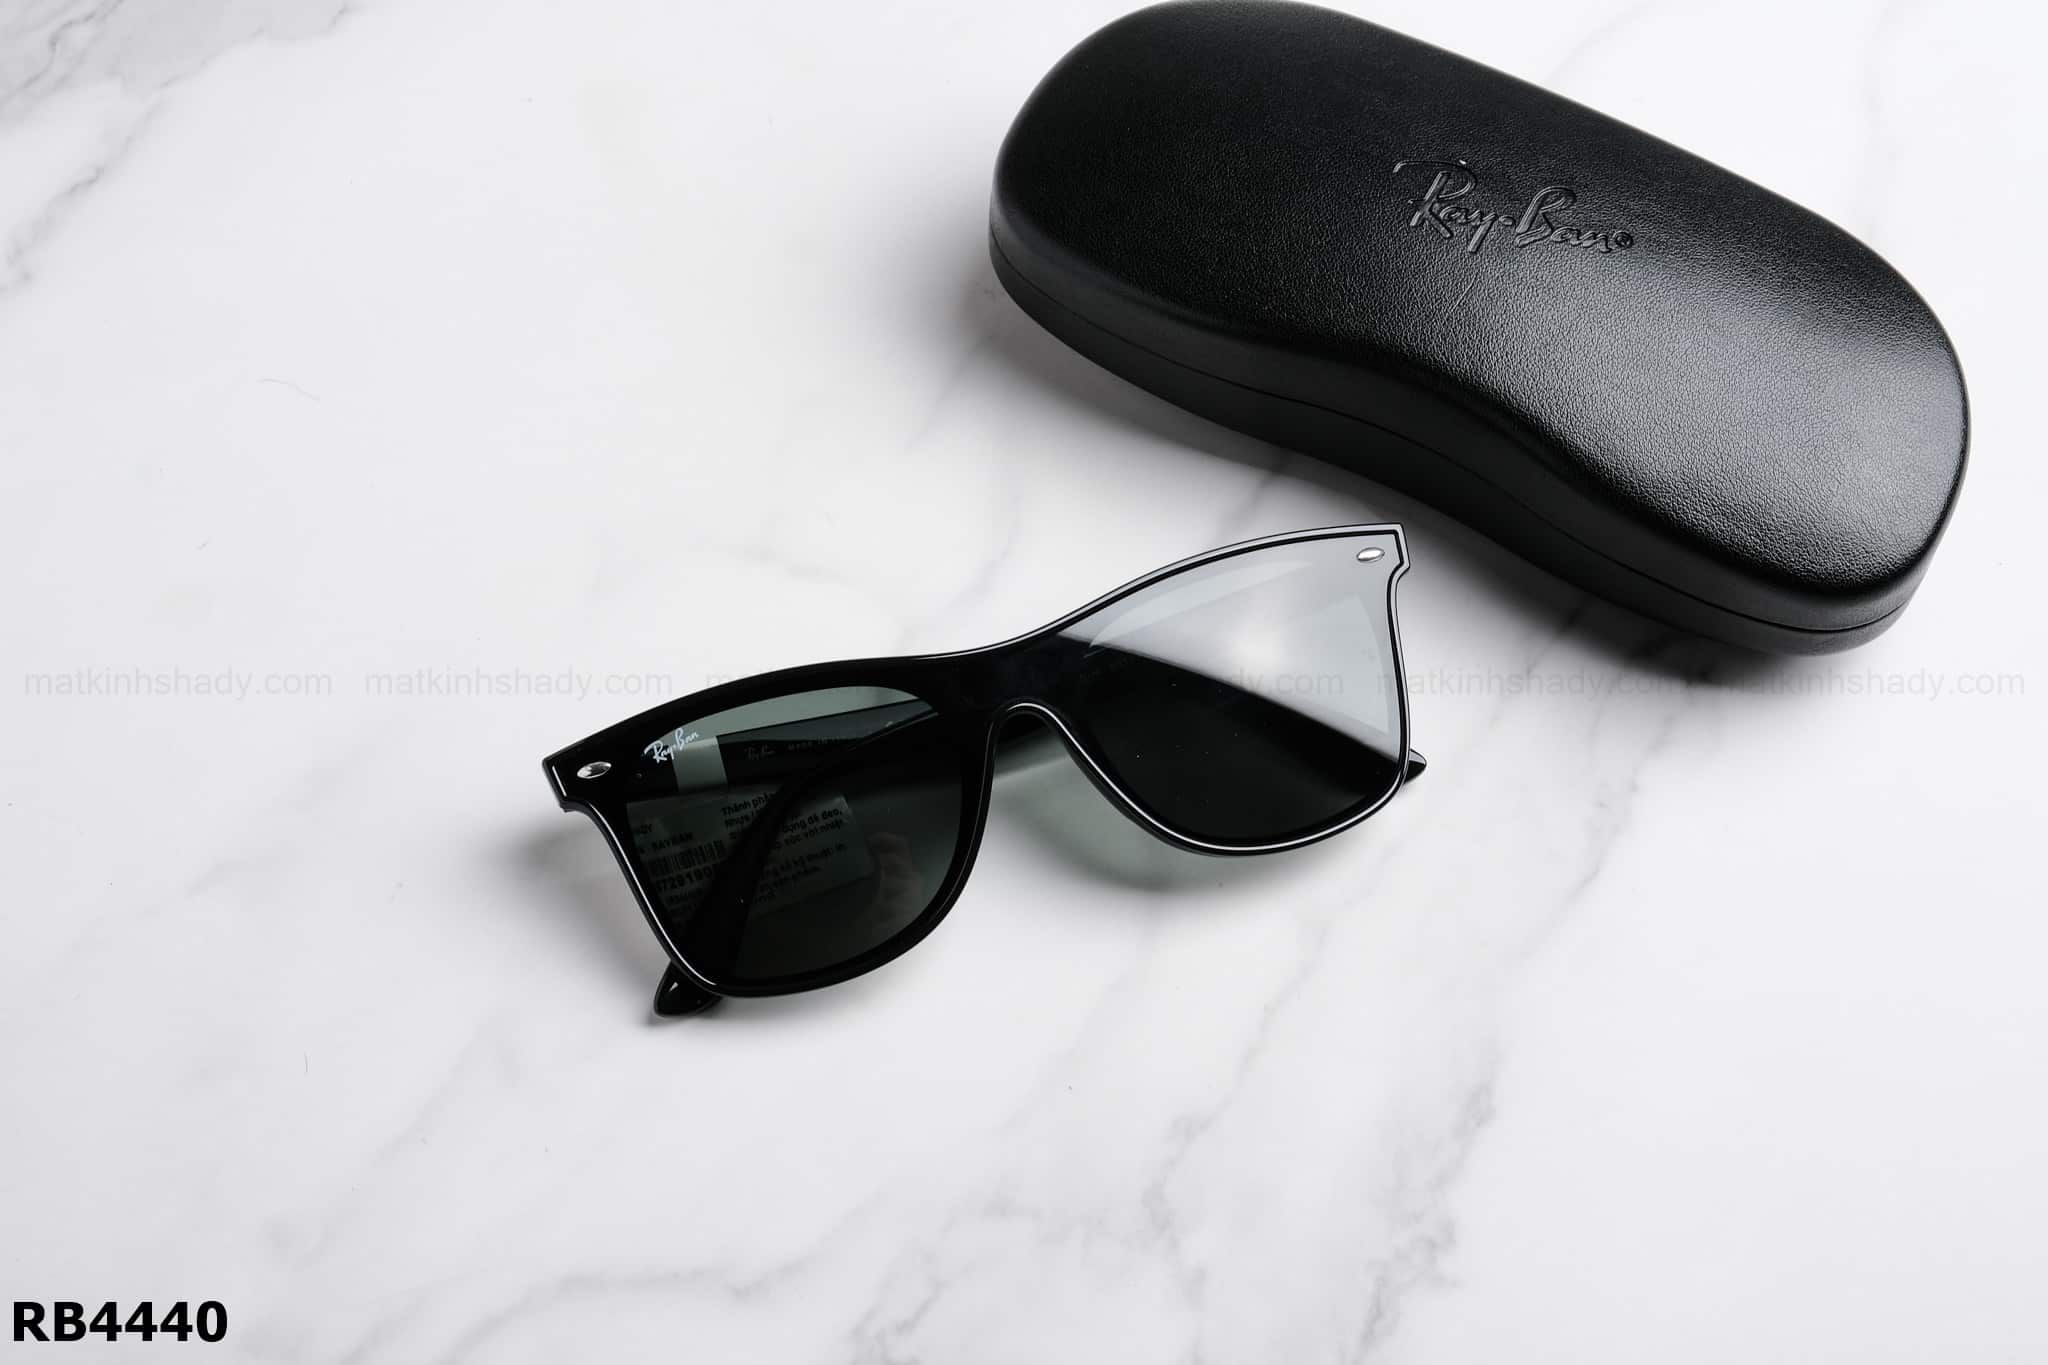  Rayban Eyewear - Sunglasses - RB4440 